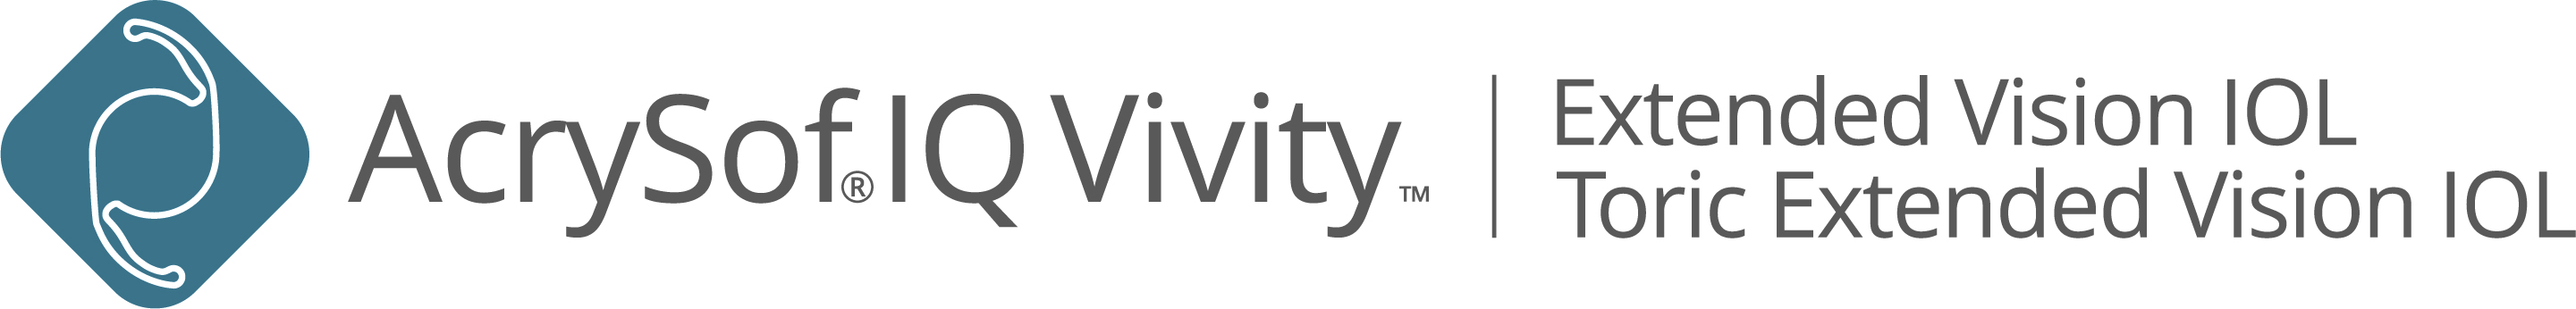 AcrysofIQ Vivity Logo